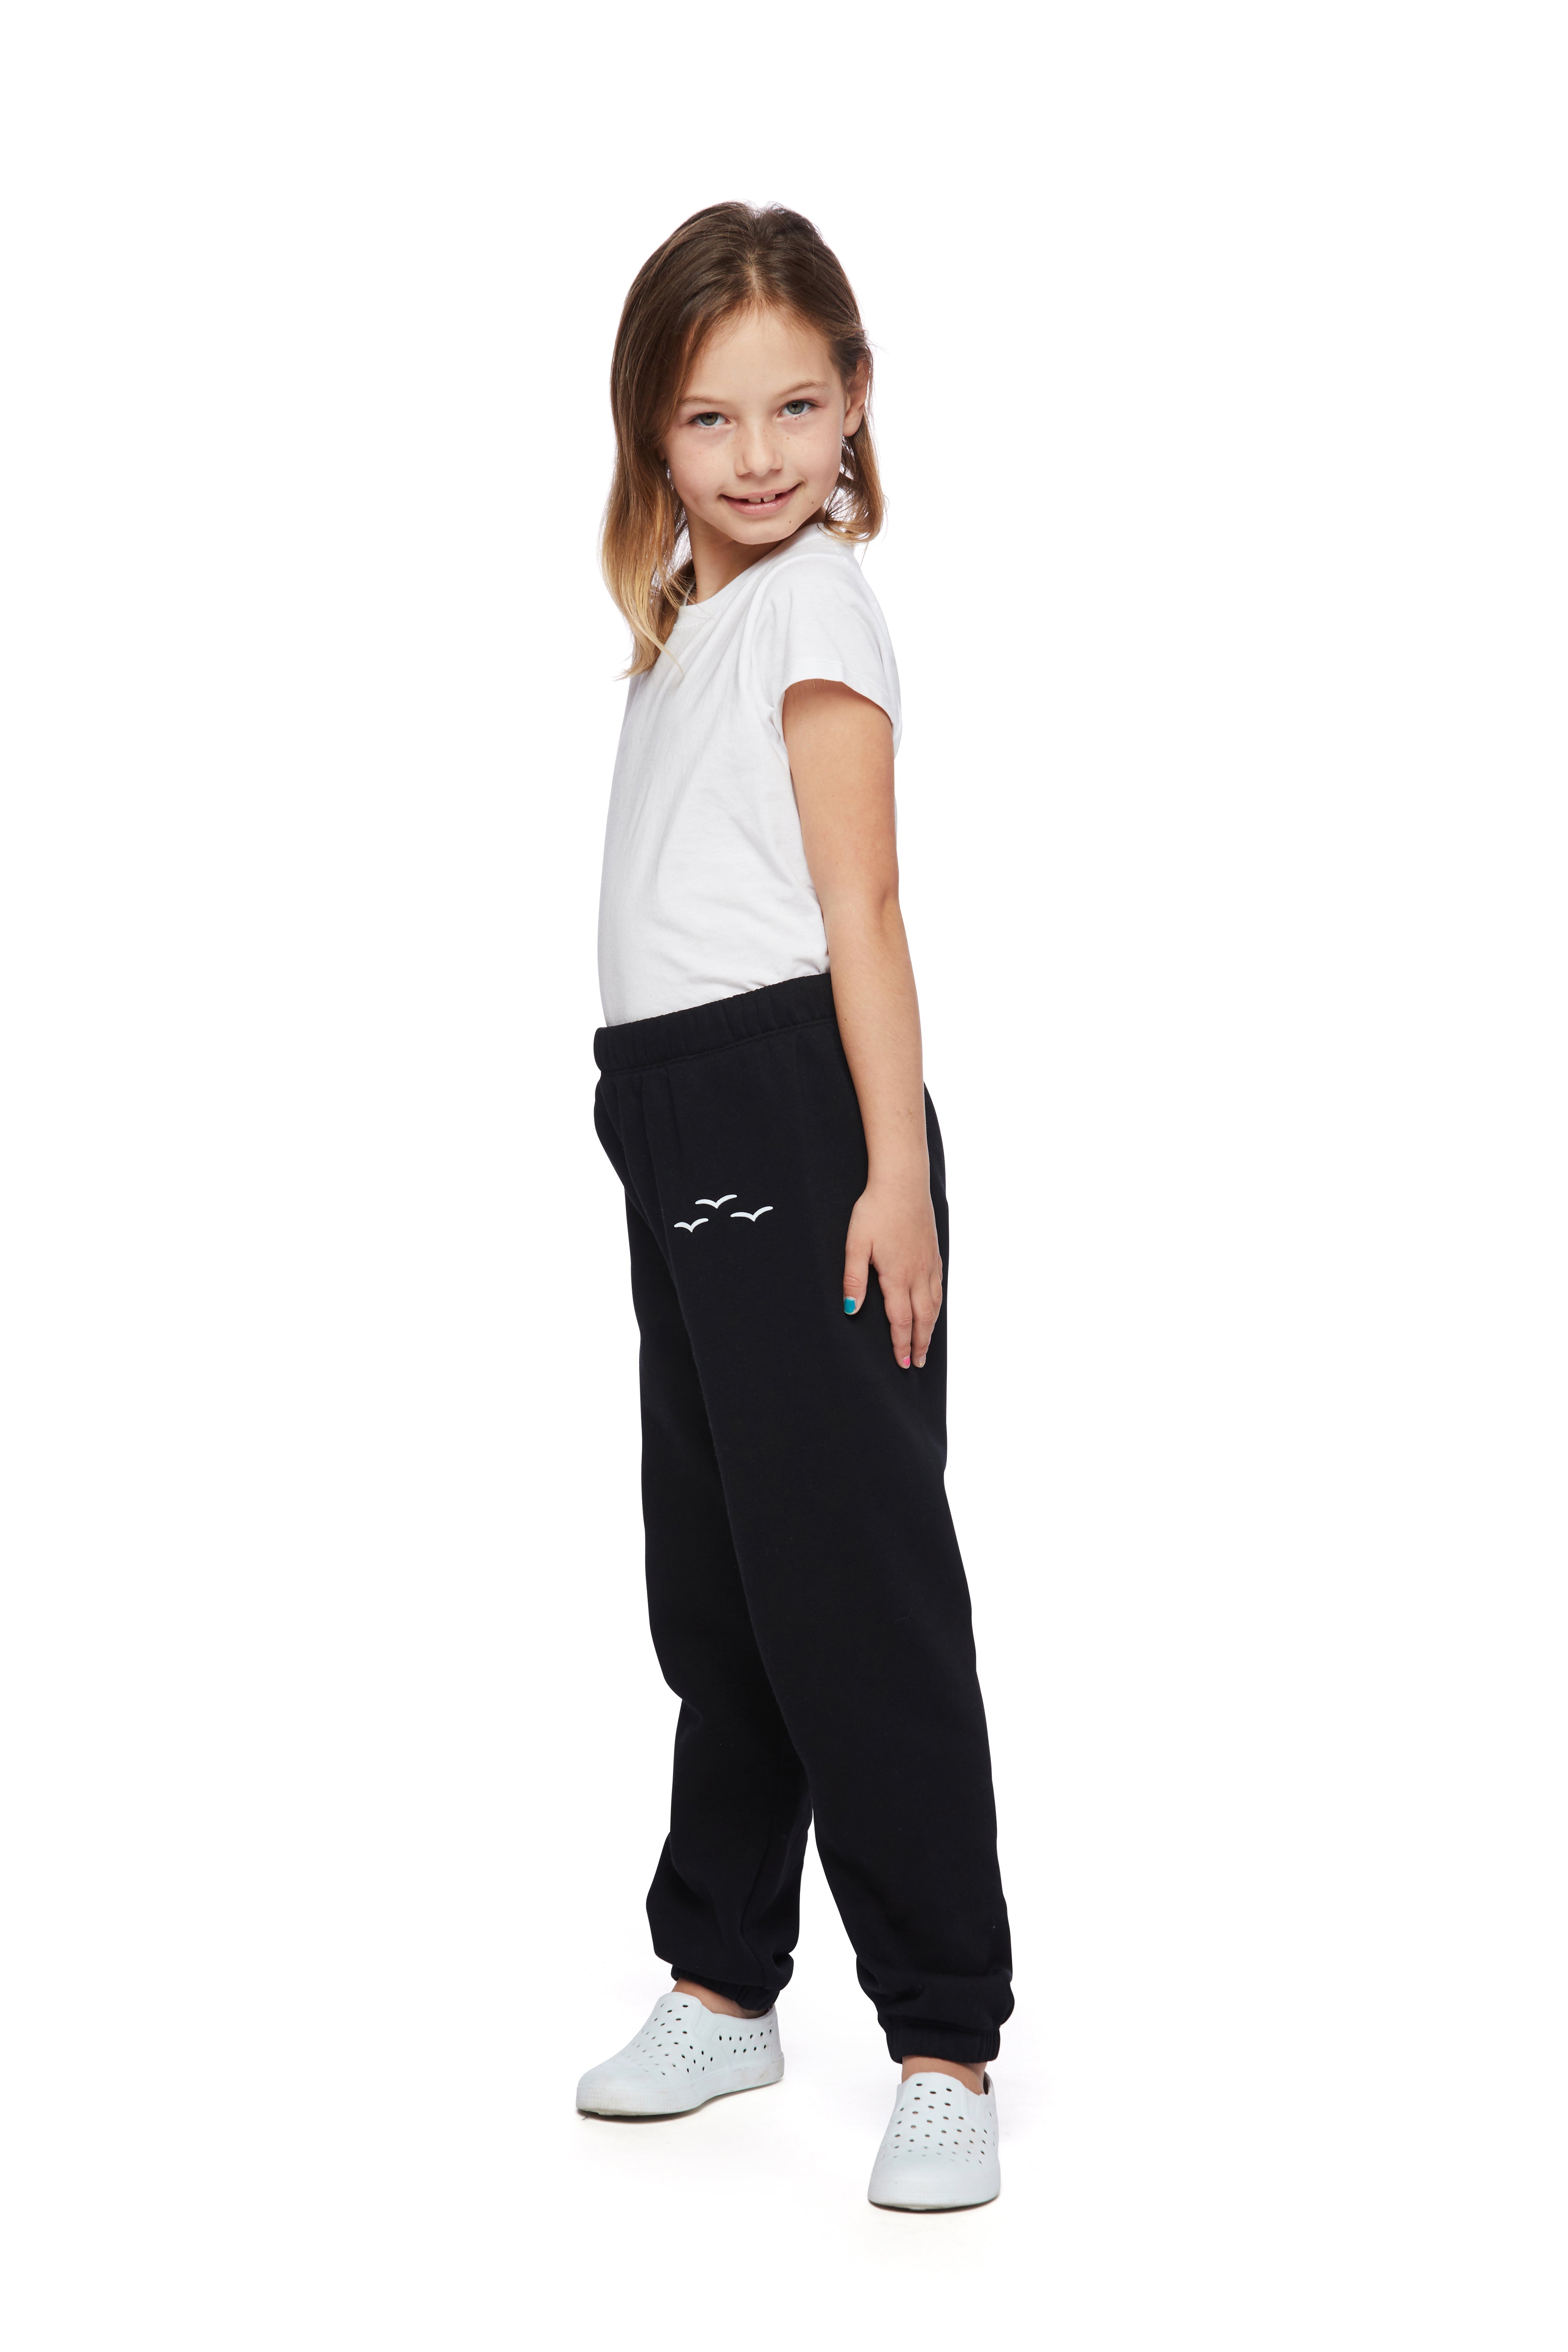 Lazypants Niki Fleece Sweatpants - Girls/Boys - Black - Dancewear